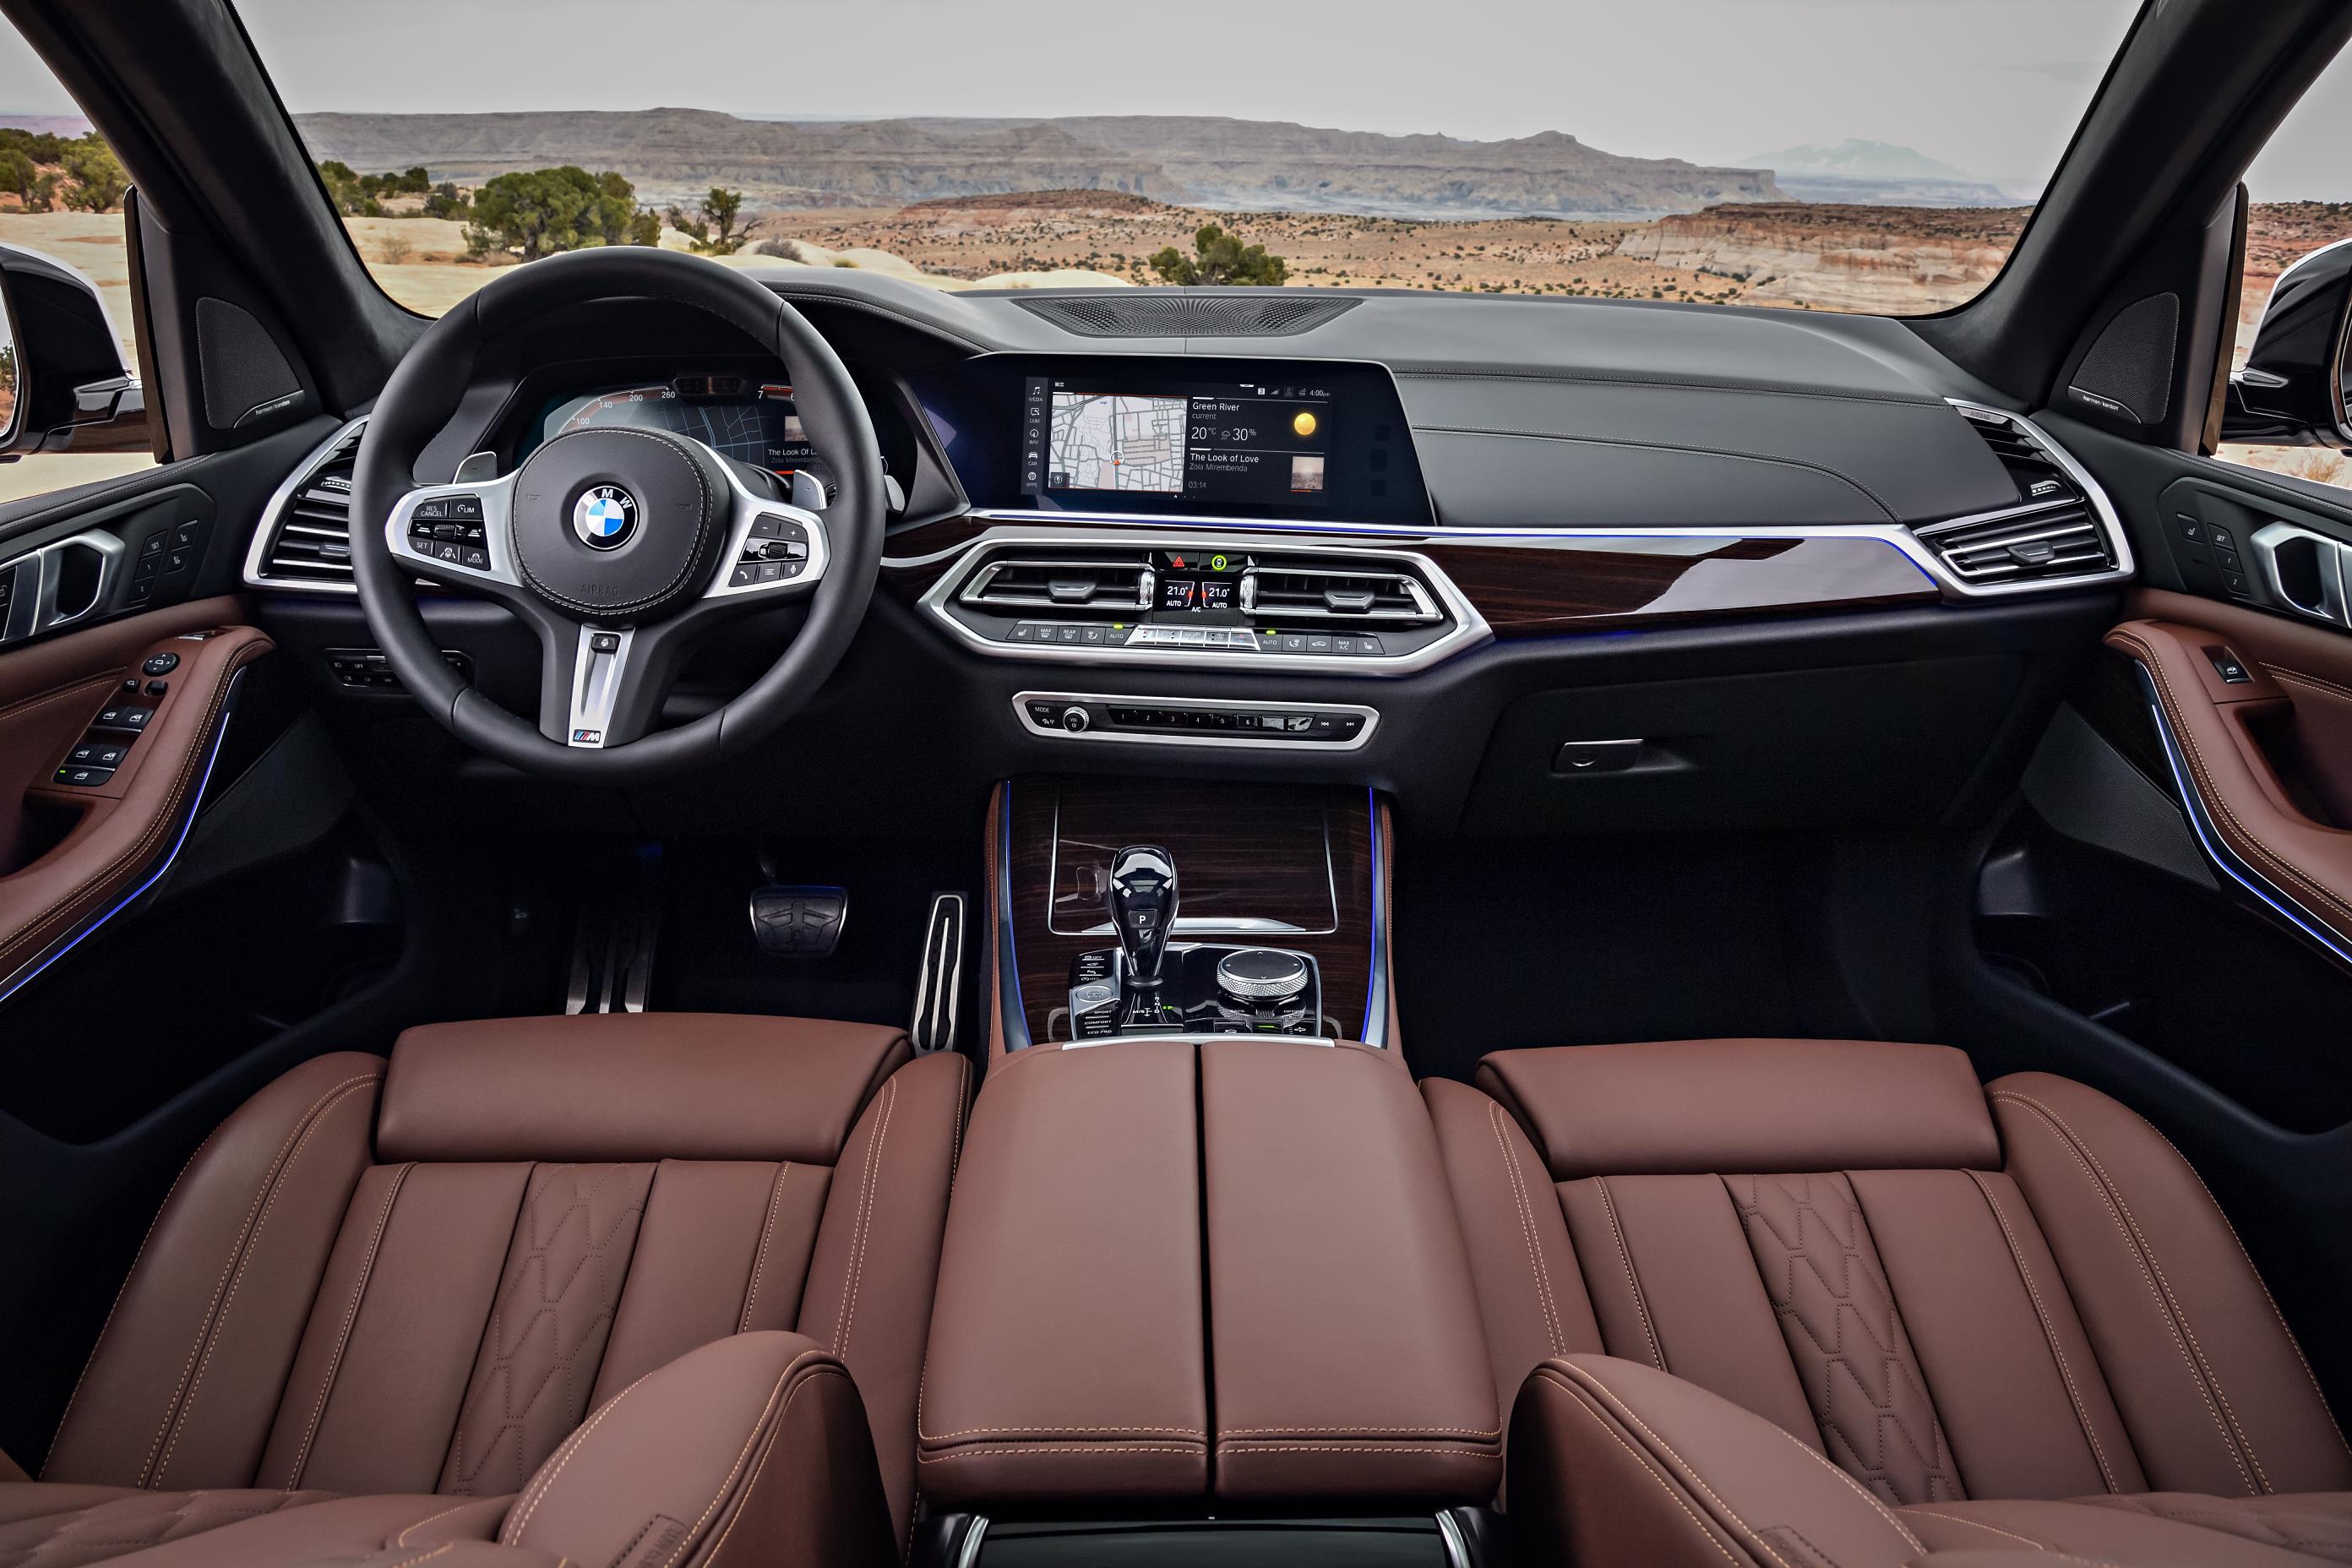 Take a Look Inside the 2020 BMW X5 Interior  United BMW